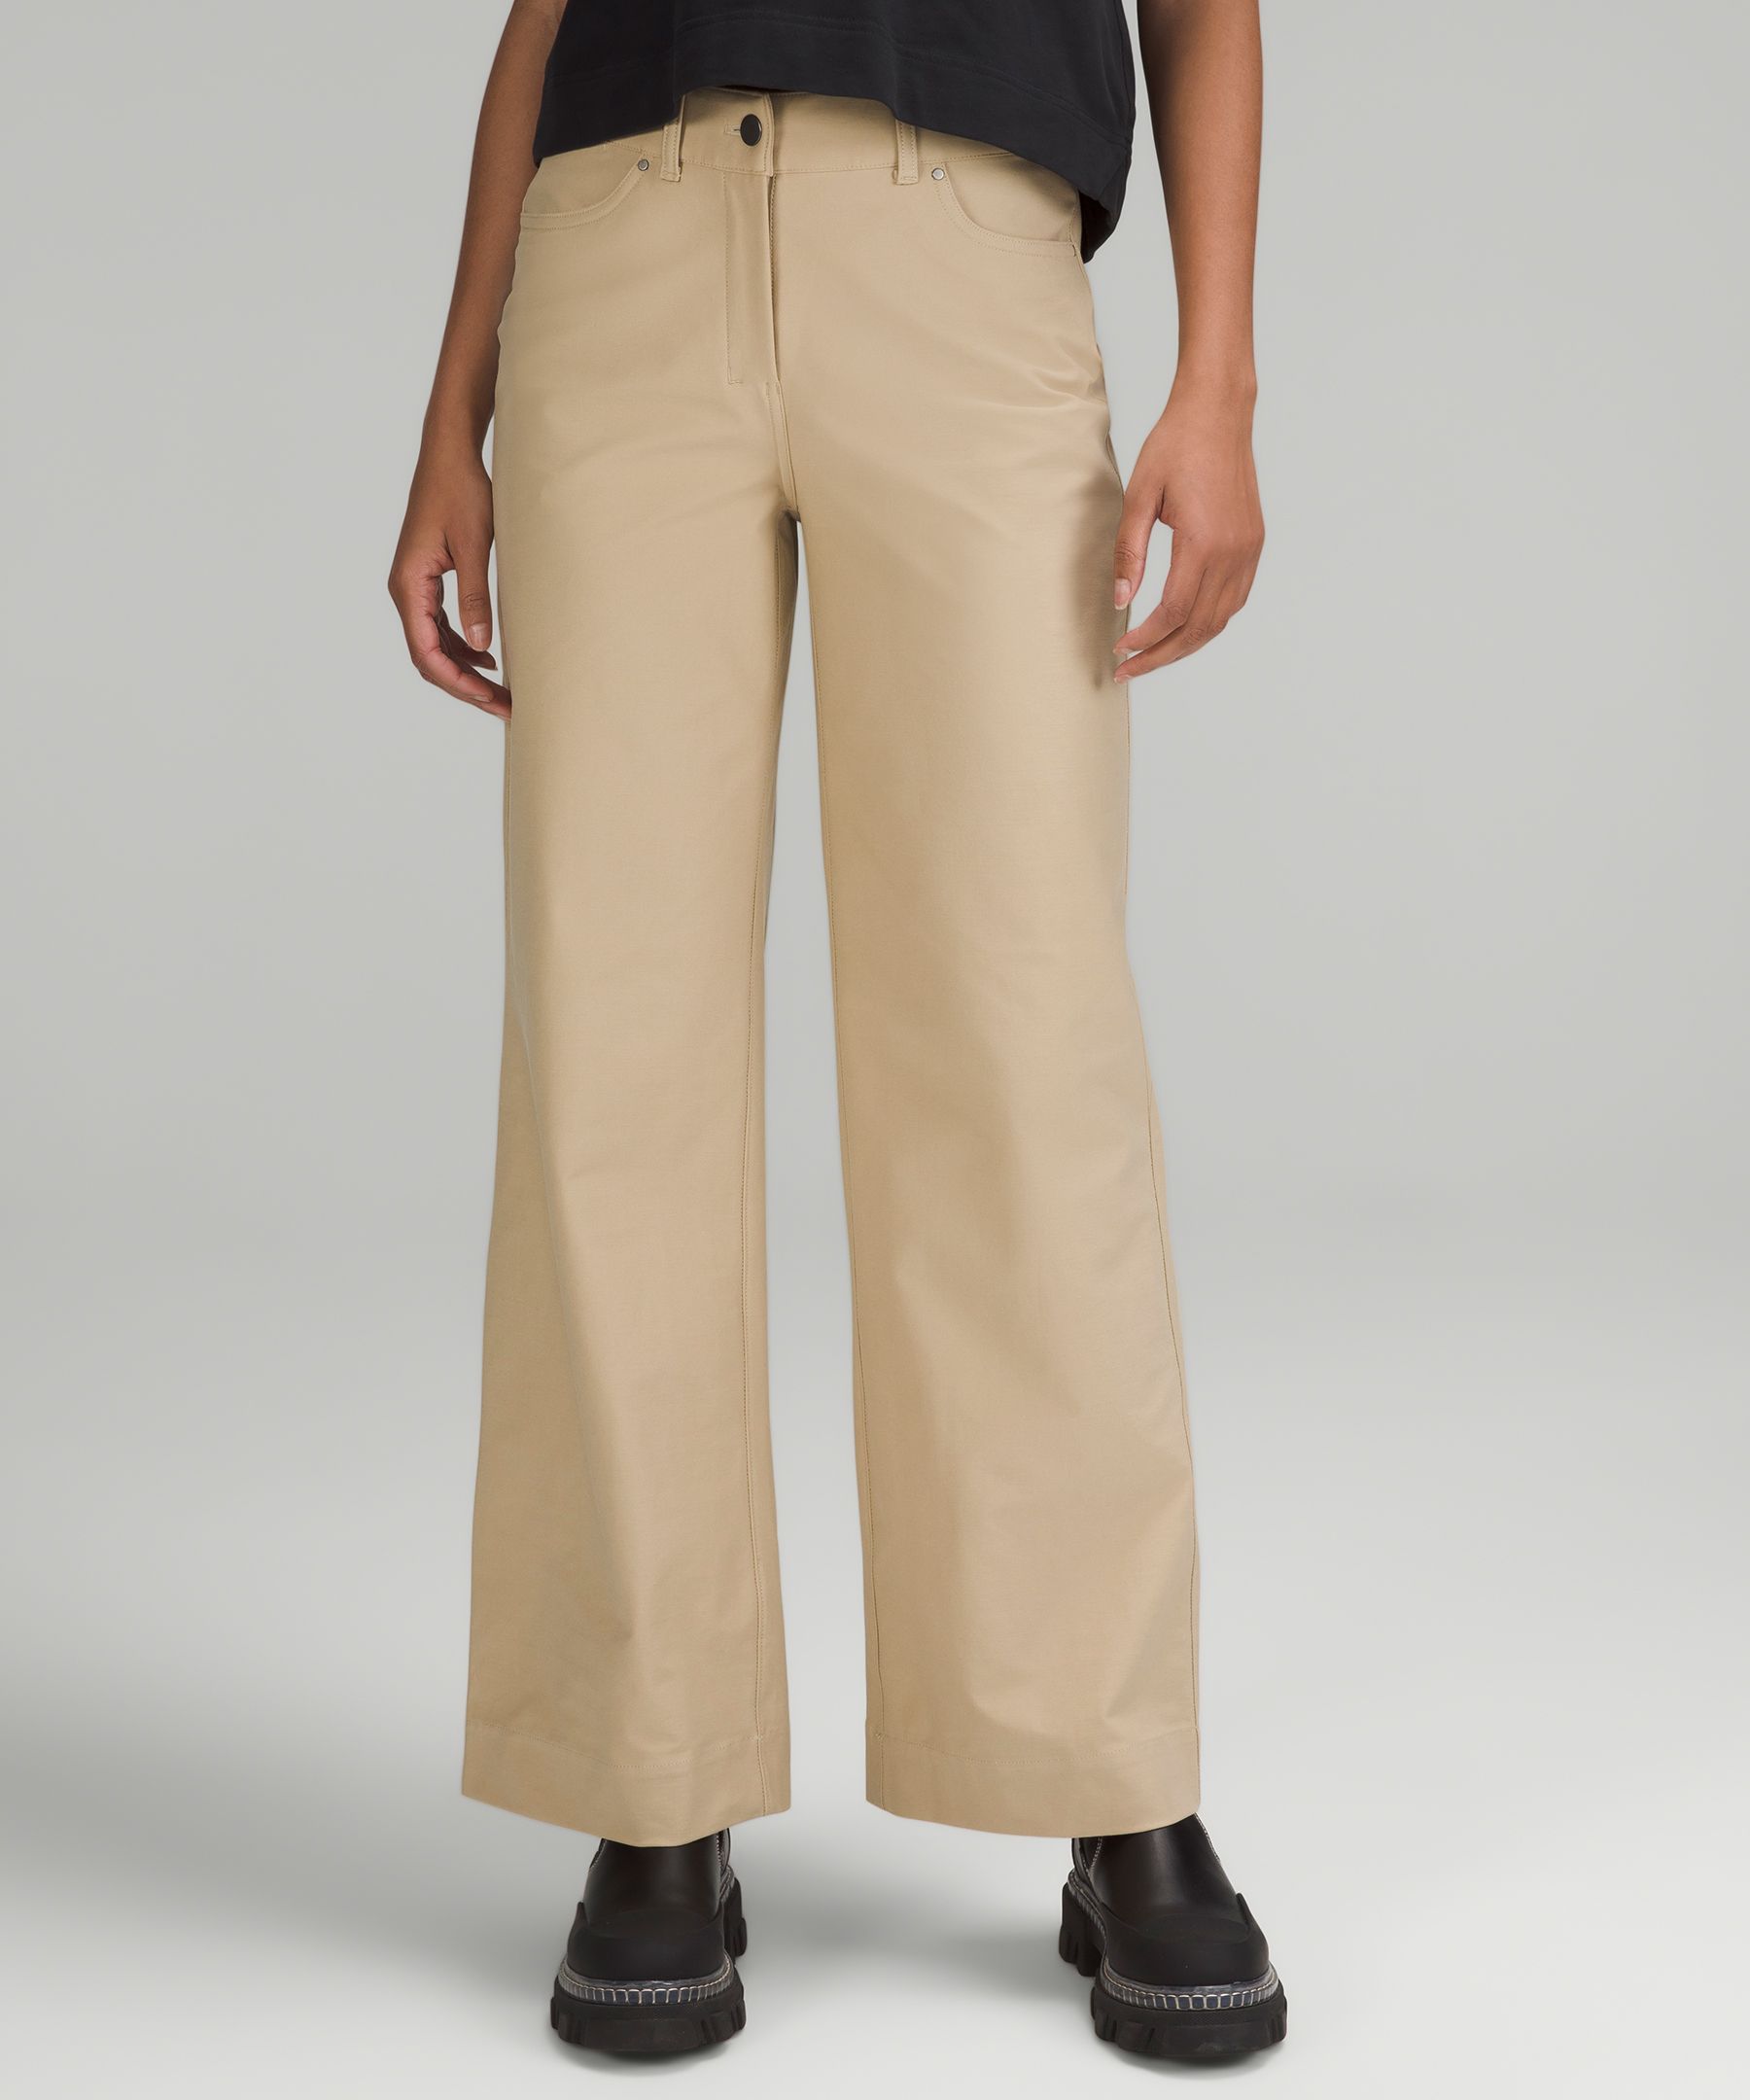 Lululemon City Sleek 5 Pocket High-rise Wide-leg Pants Full Length